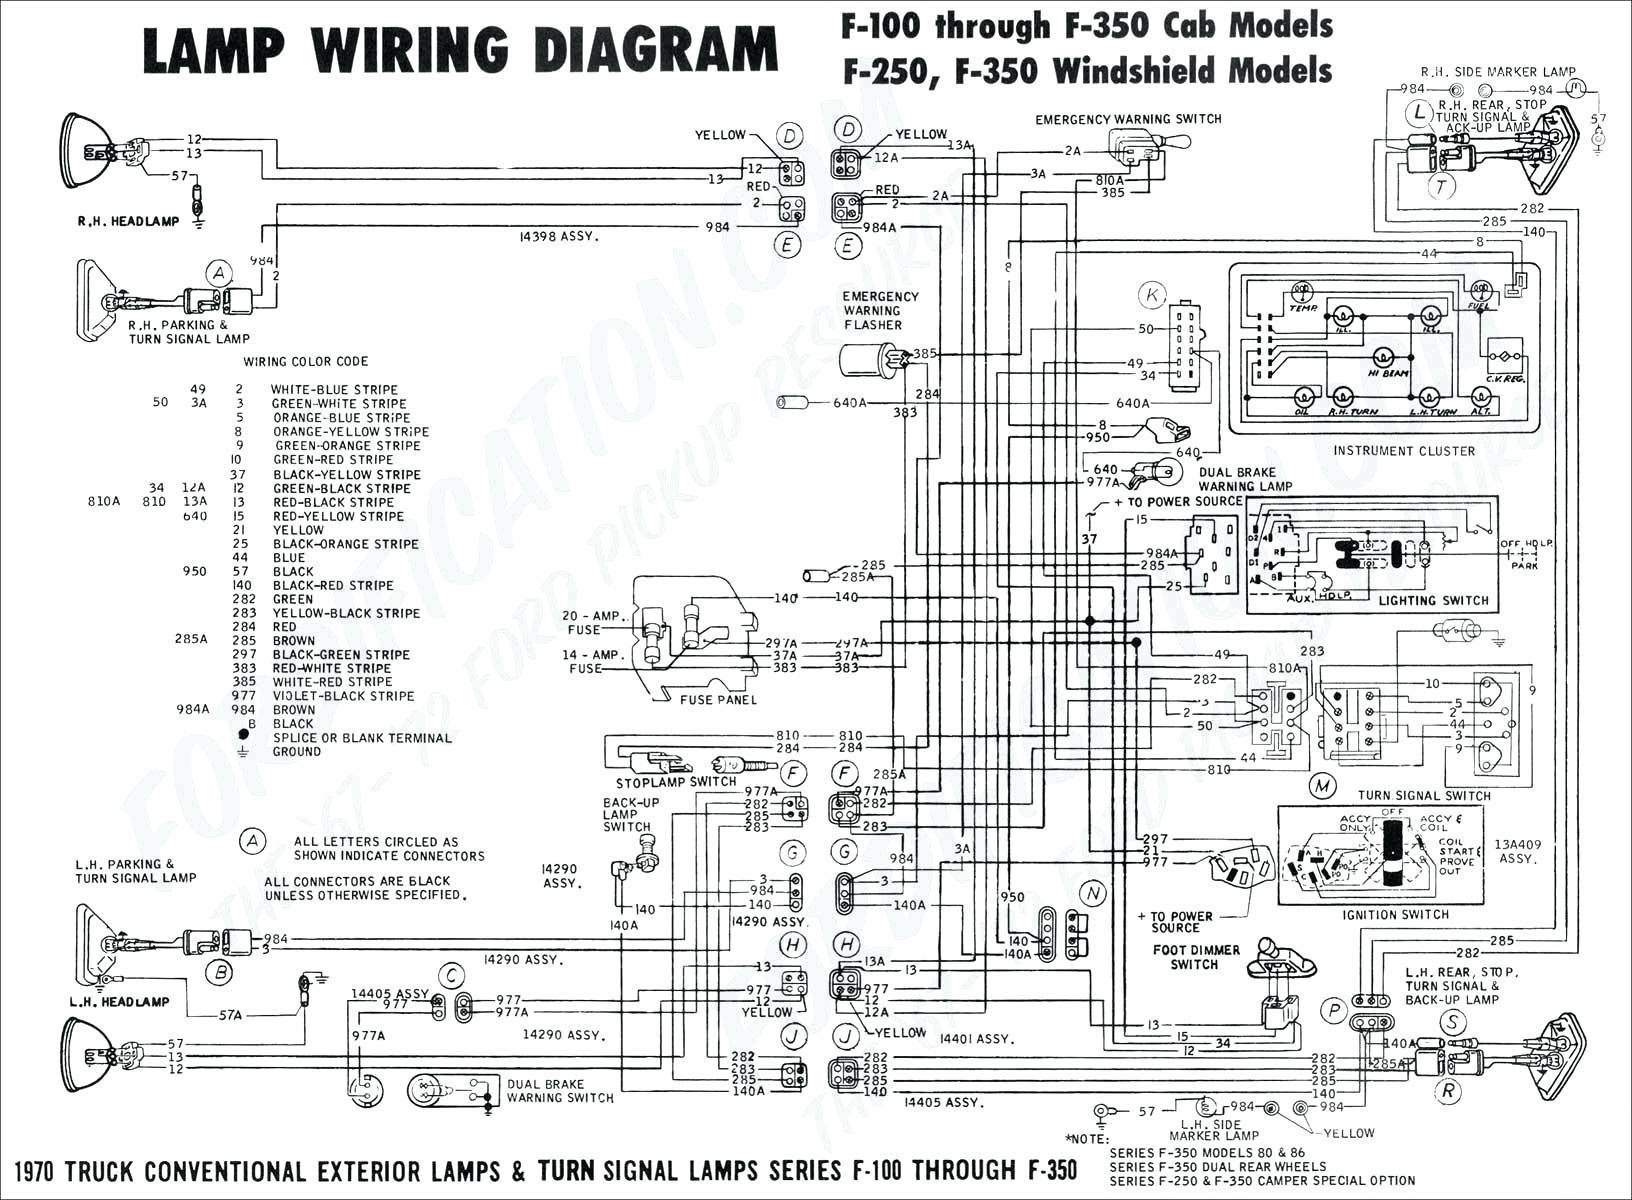 2014 Dodge Wiring Harnes Diagram - Wiring Diagram 89